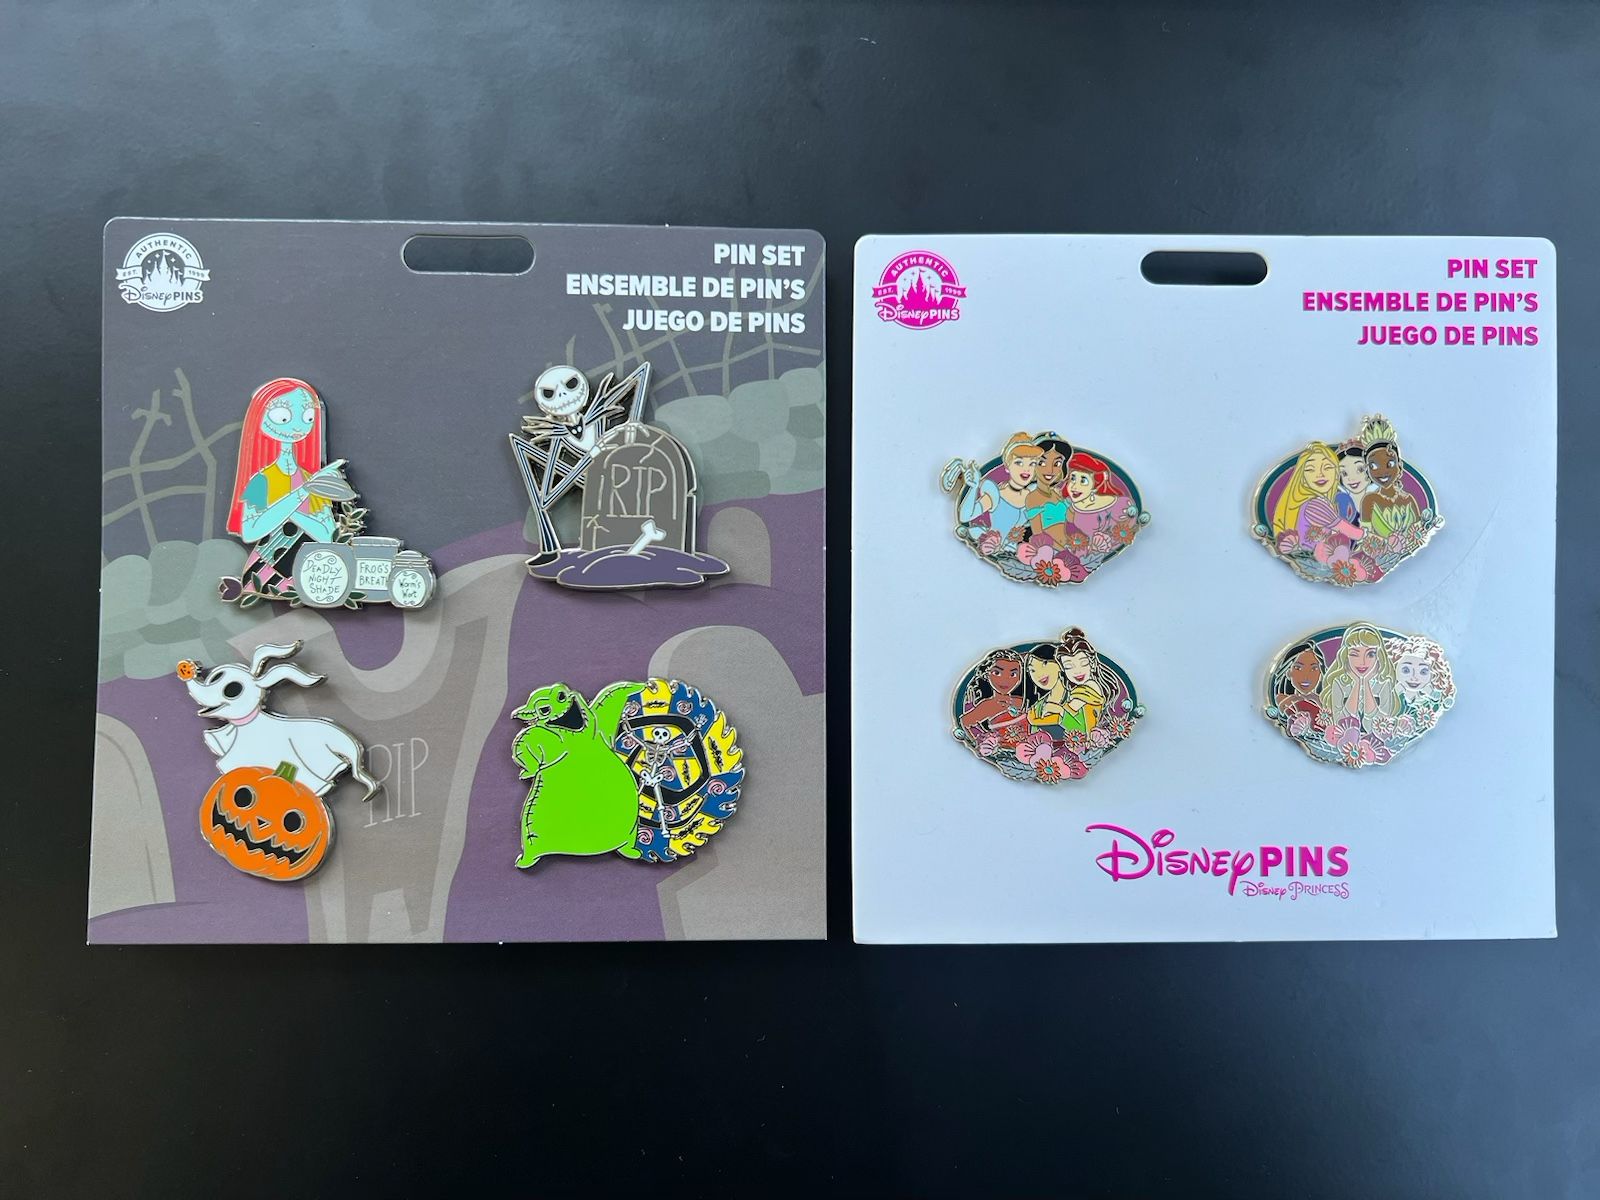 Disney Park Official Pin Sets